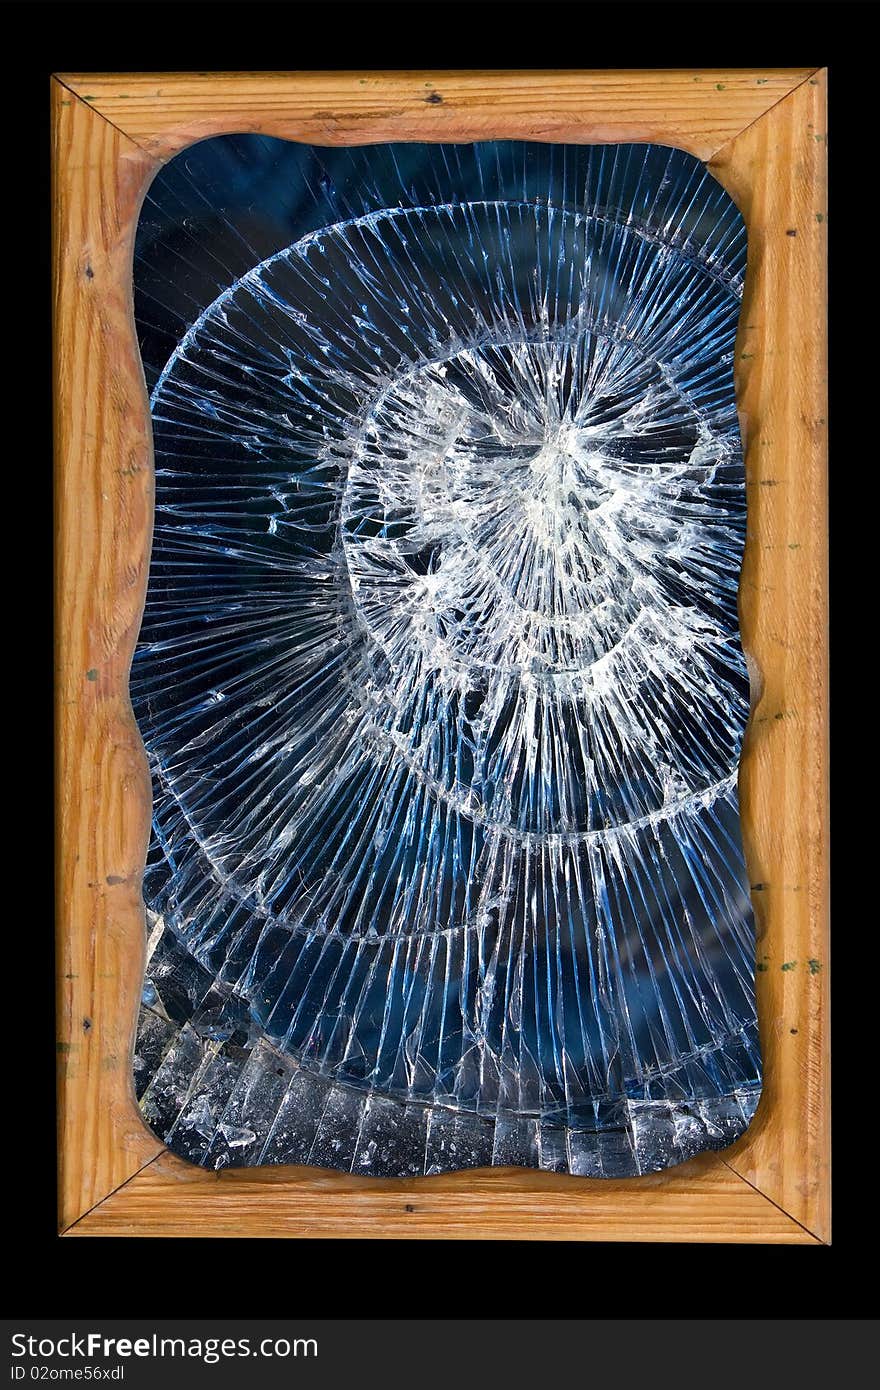 Cracks in the broken windowpane in a frame. Cracks in the broken windowpane in a frame